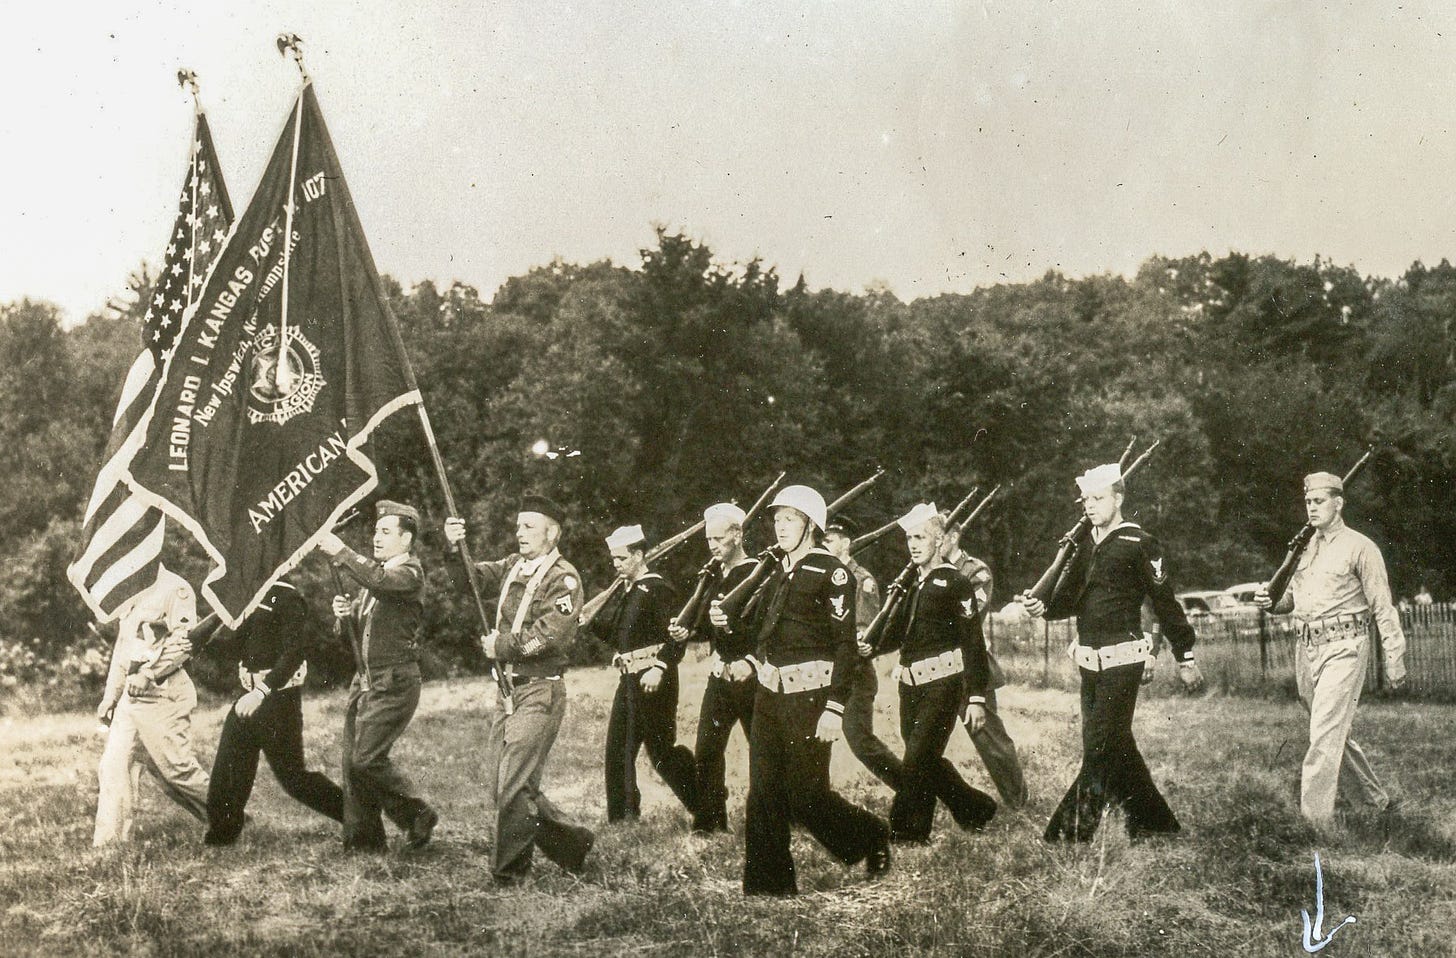 Marching men in uniform